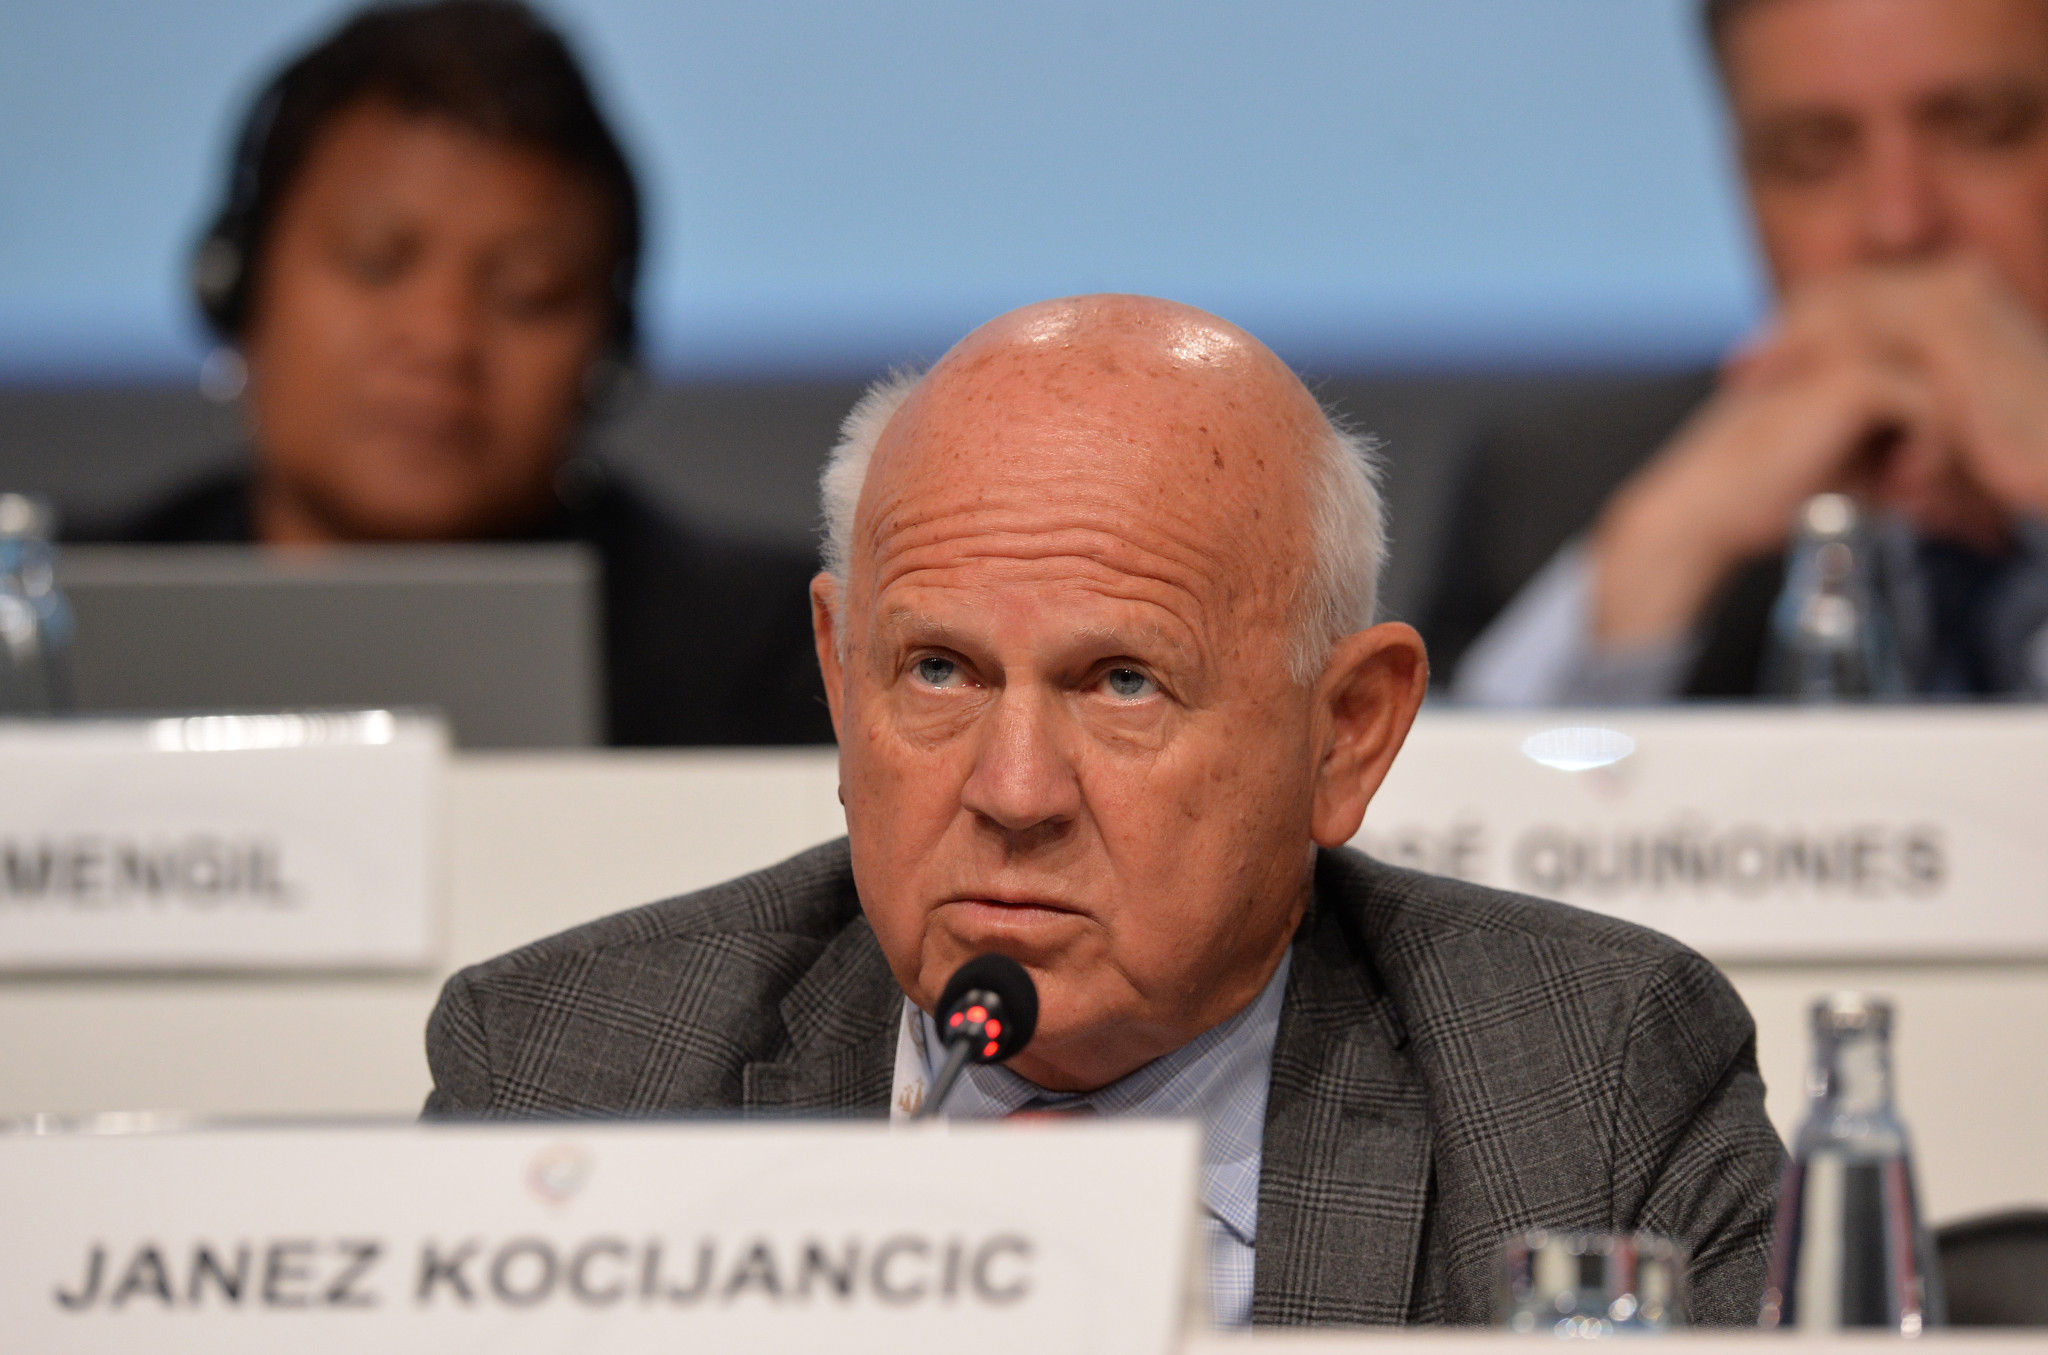 Kocijančič set to be elected unopposed as European Olympic Committees President